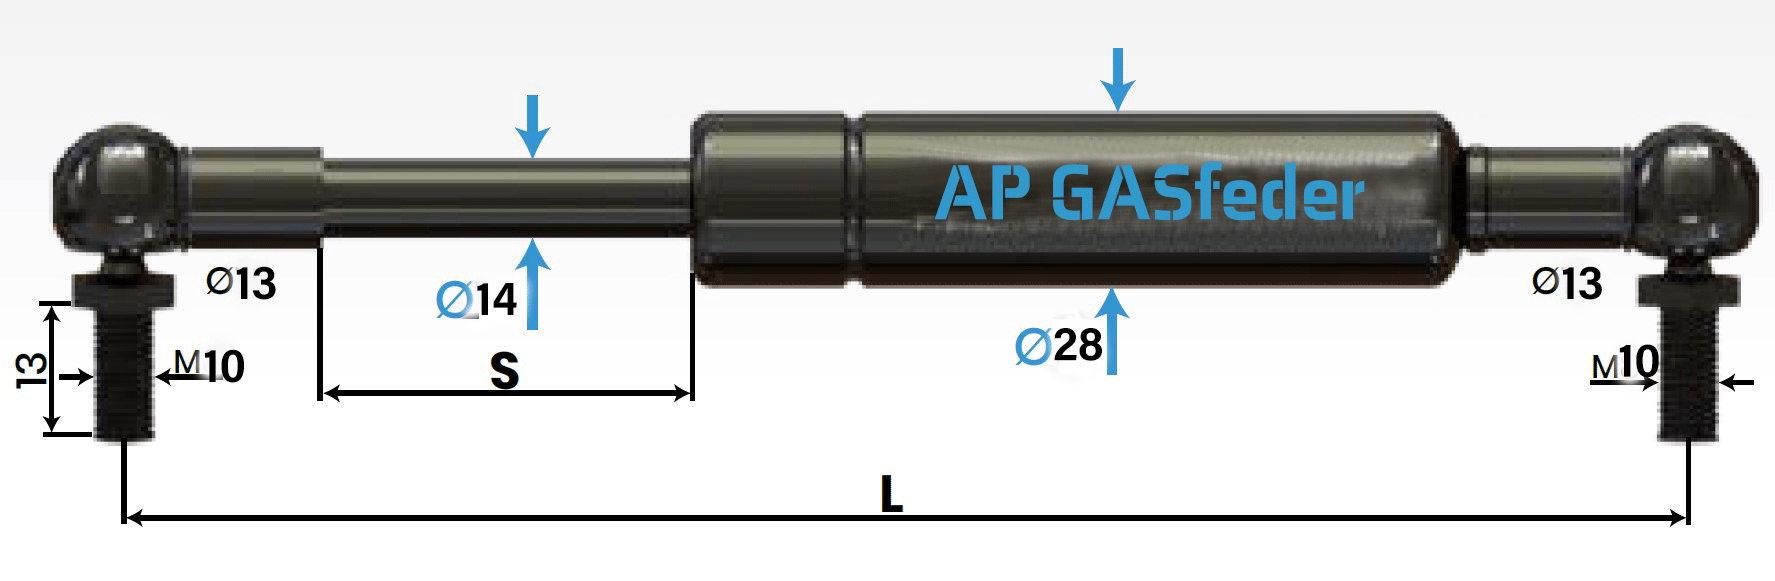 Image de AP GASfeder 1000N, 14/28, Hub(S): 500 mm, Länge (L): 1135 mm,  Alternatvie SRST.2394LH